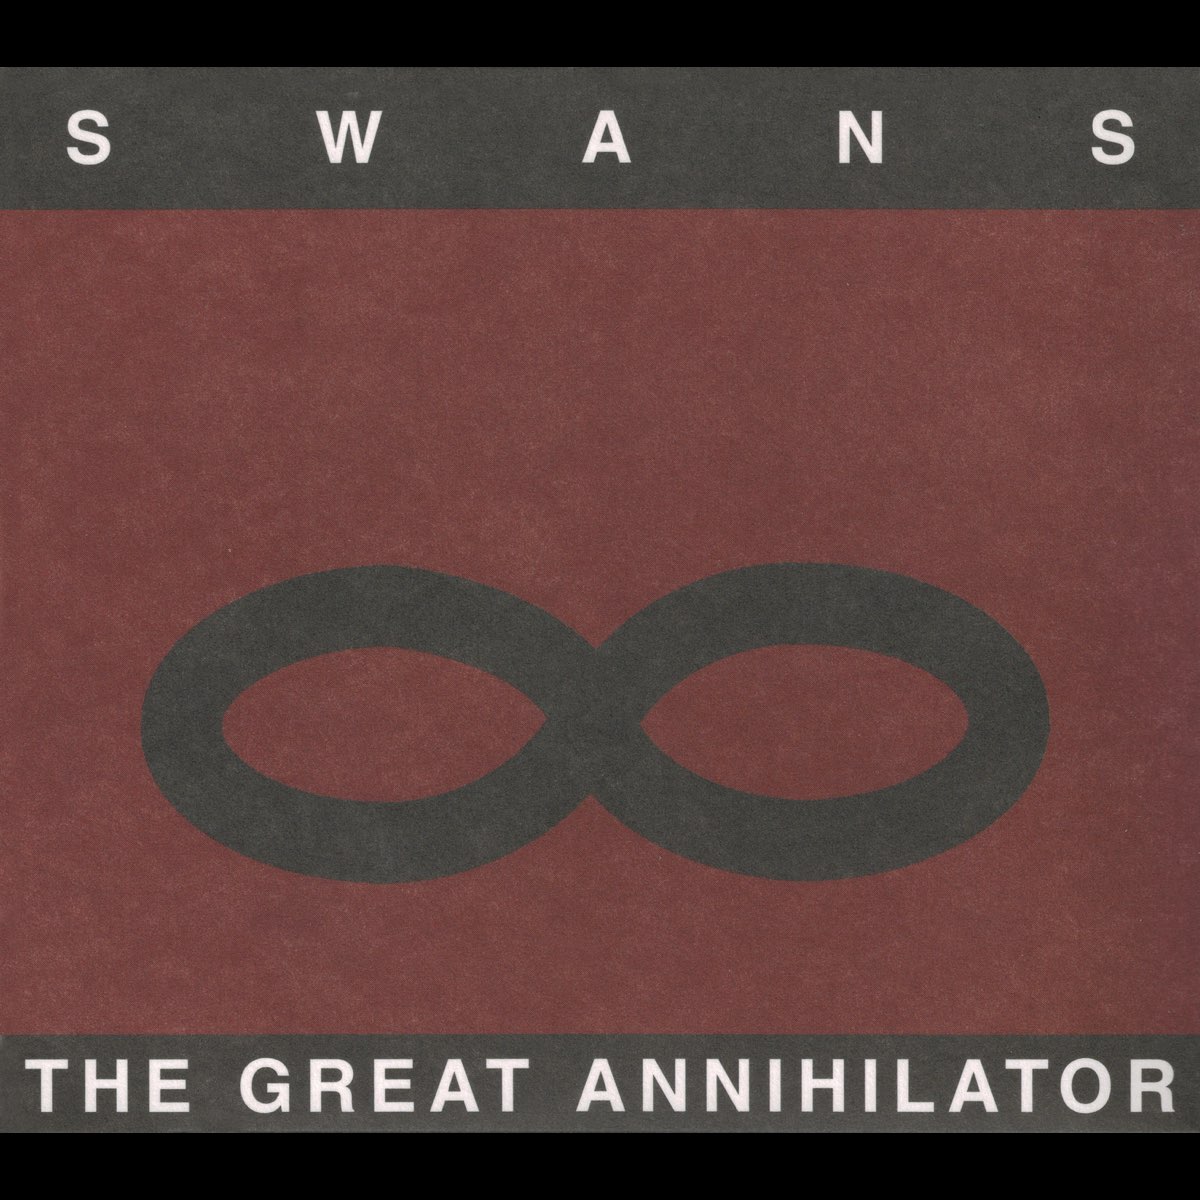 Great Annihilator - Album by Swans - Apple Music